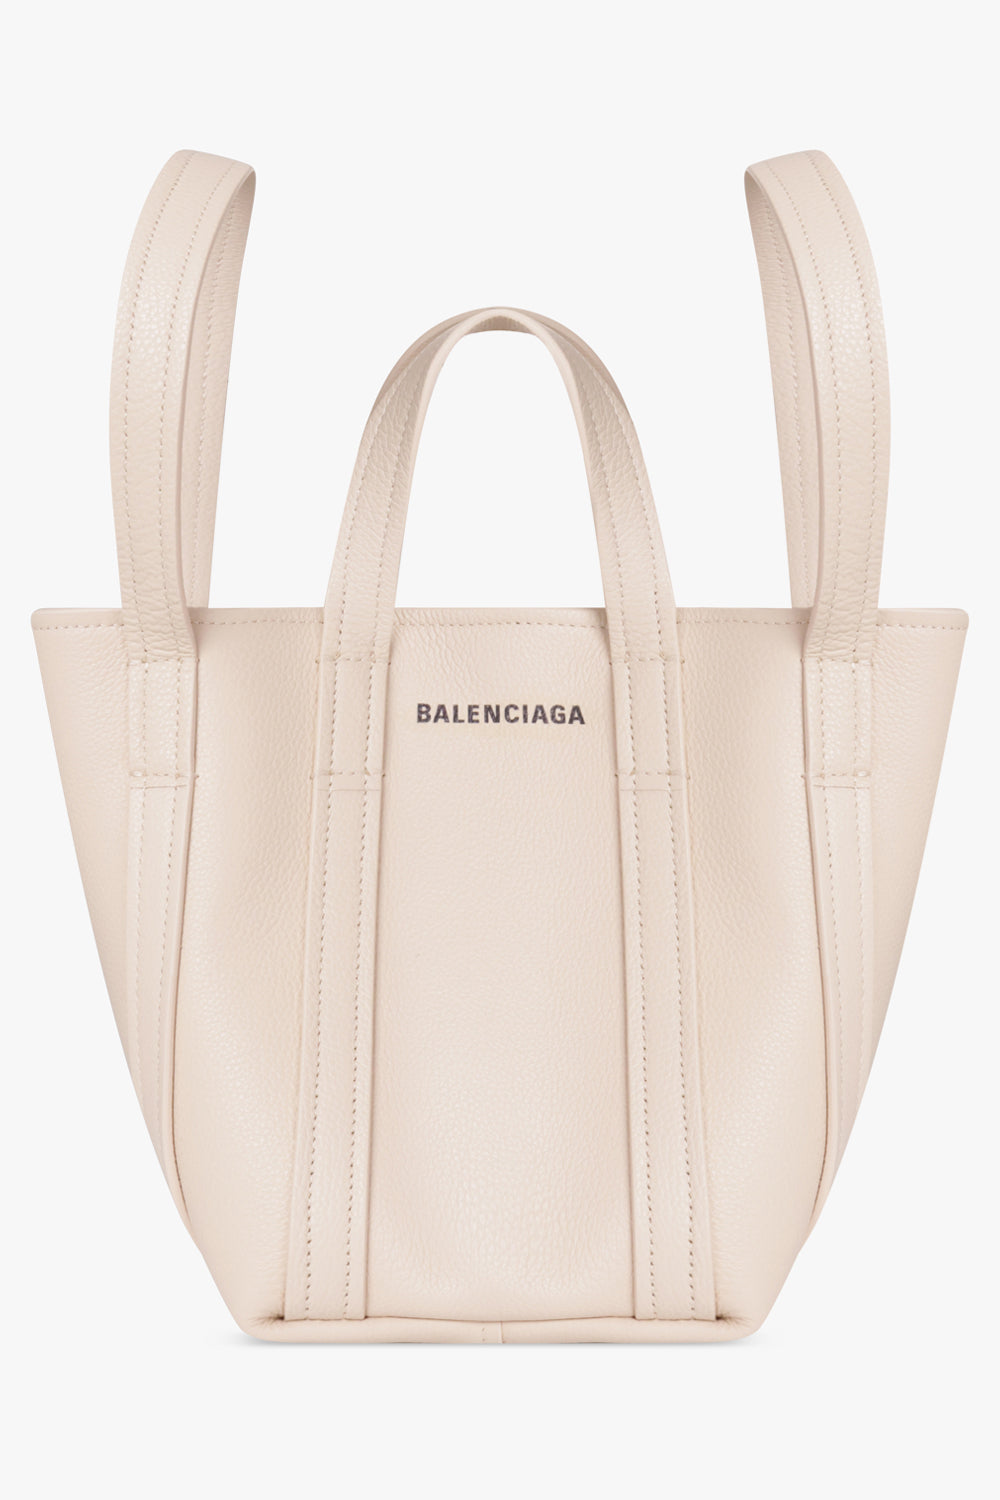 BALENCIAGA BAGS BEIGE EVERYDAY 2.0 XS N/S SHOPPING TOTE | SAND BEIGE